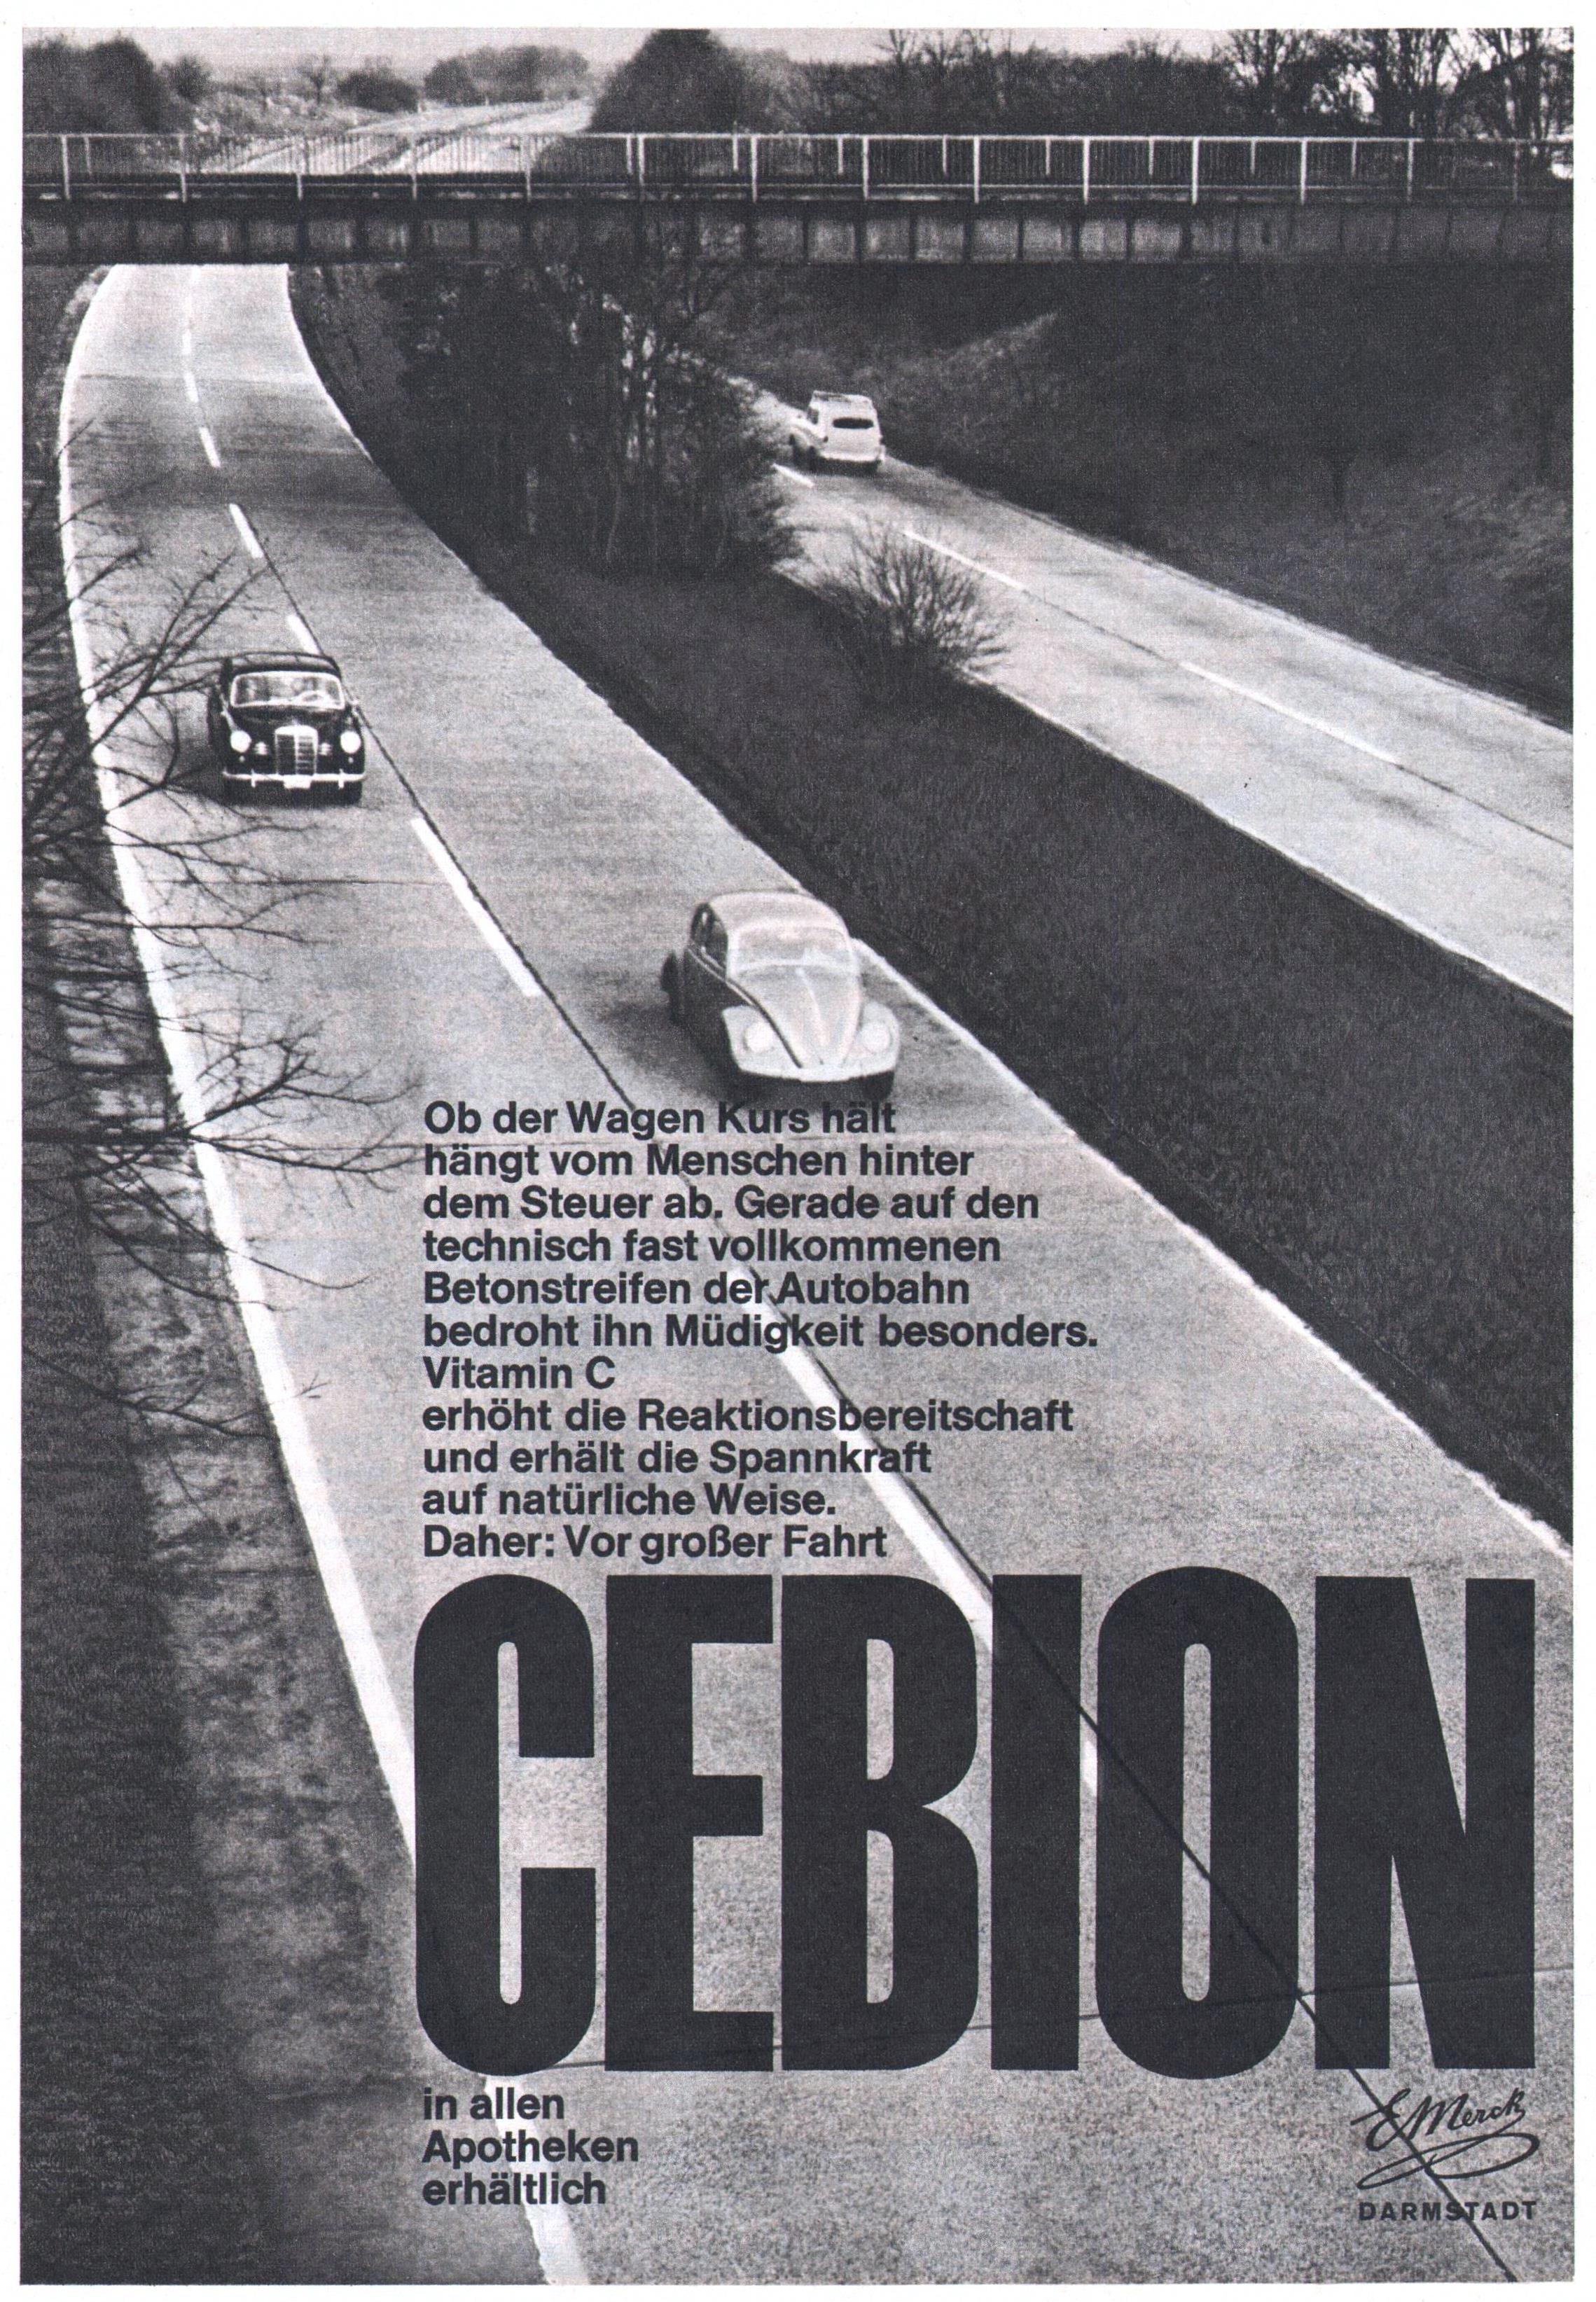 Cebion 1962 0.jpg